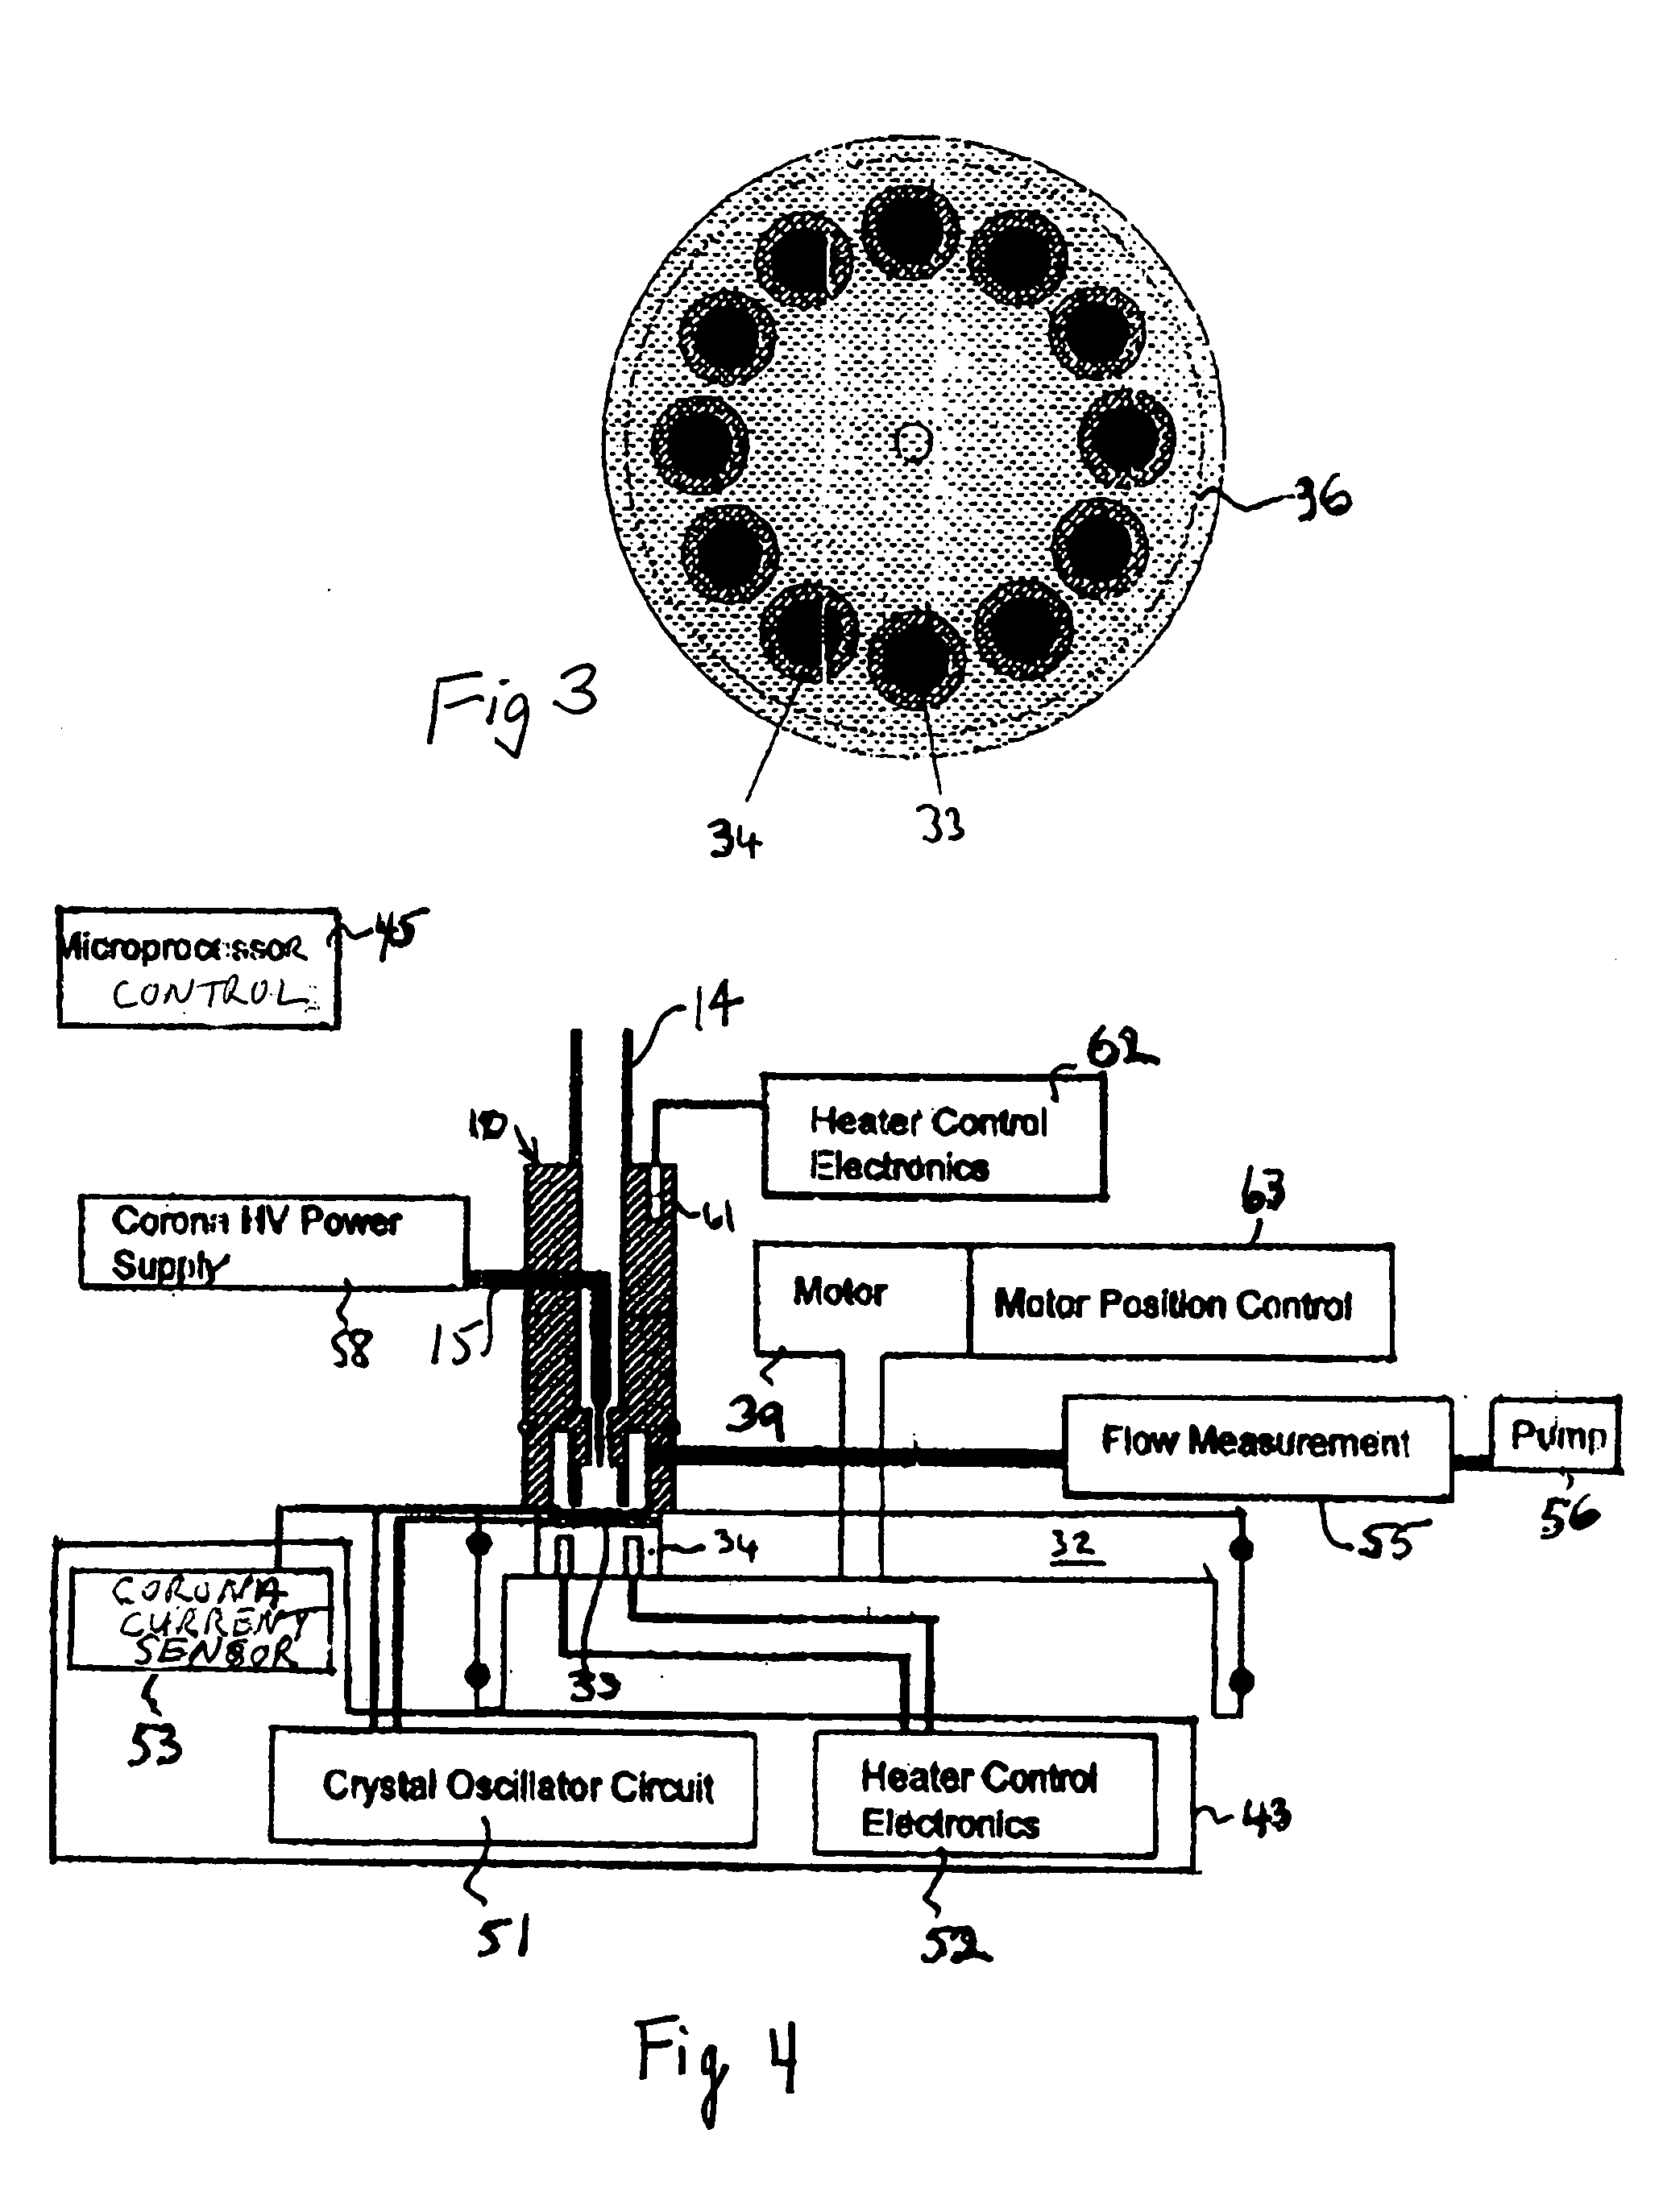 Apparatus for analysis of aerosols